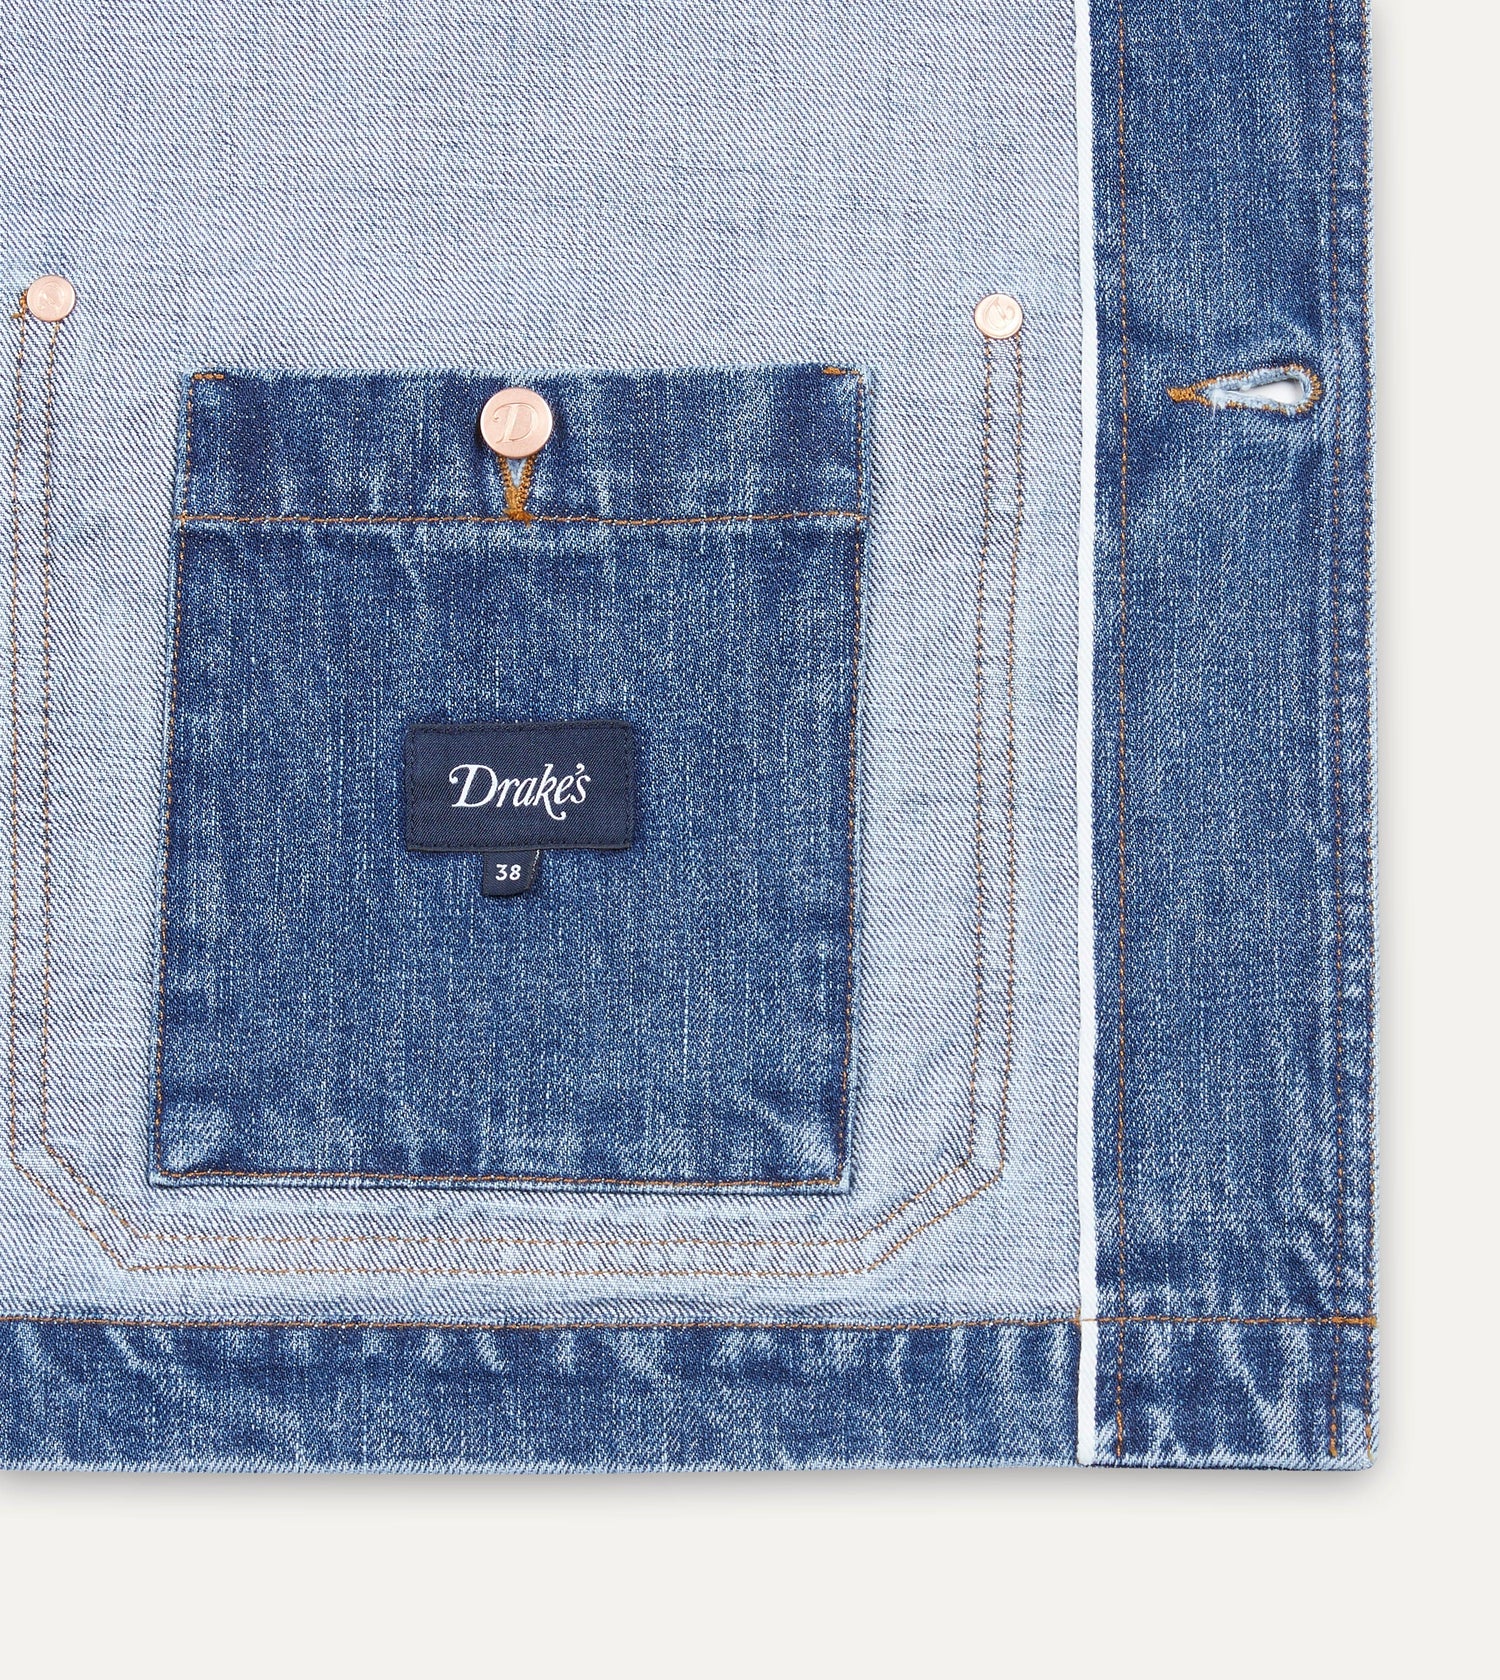 Bleach Wash Selvedge Denim Five-Pocket Chore Jacket